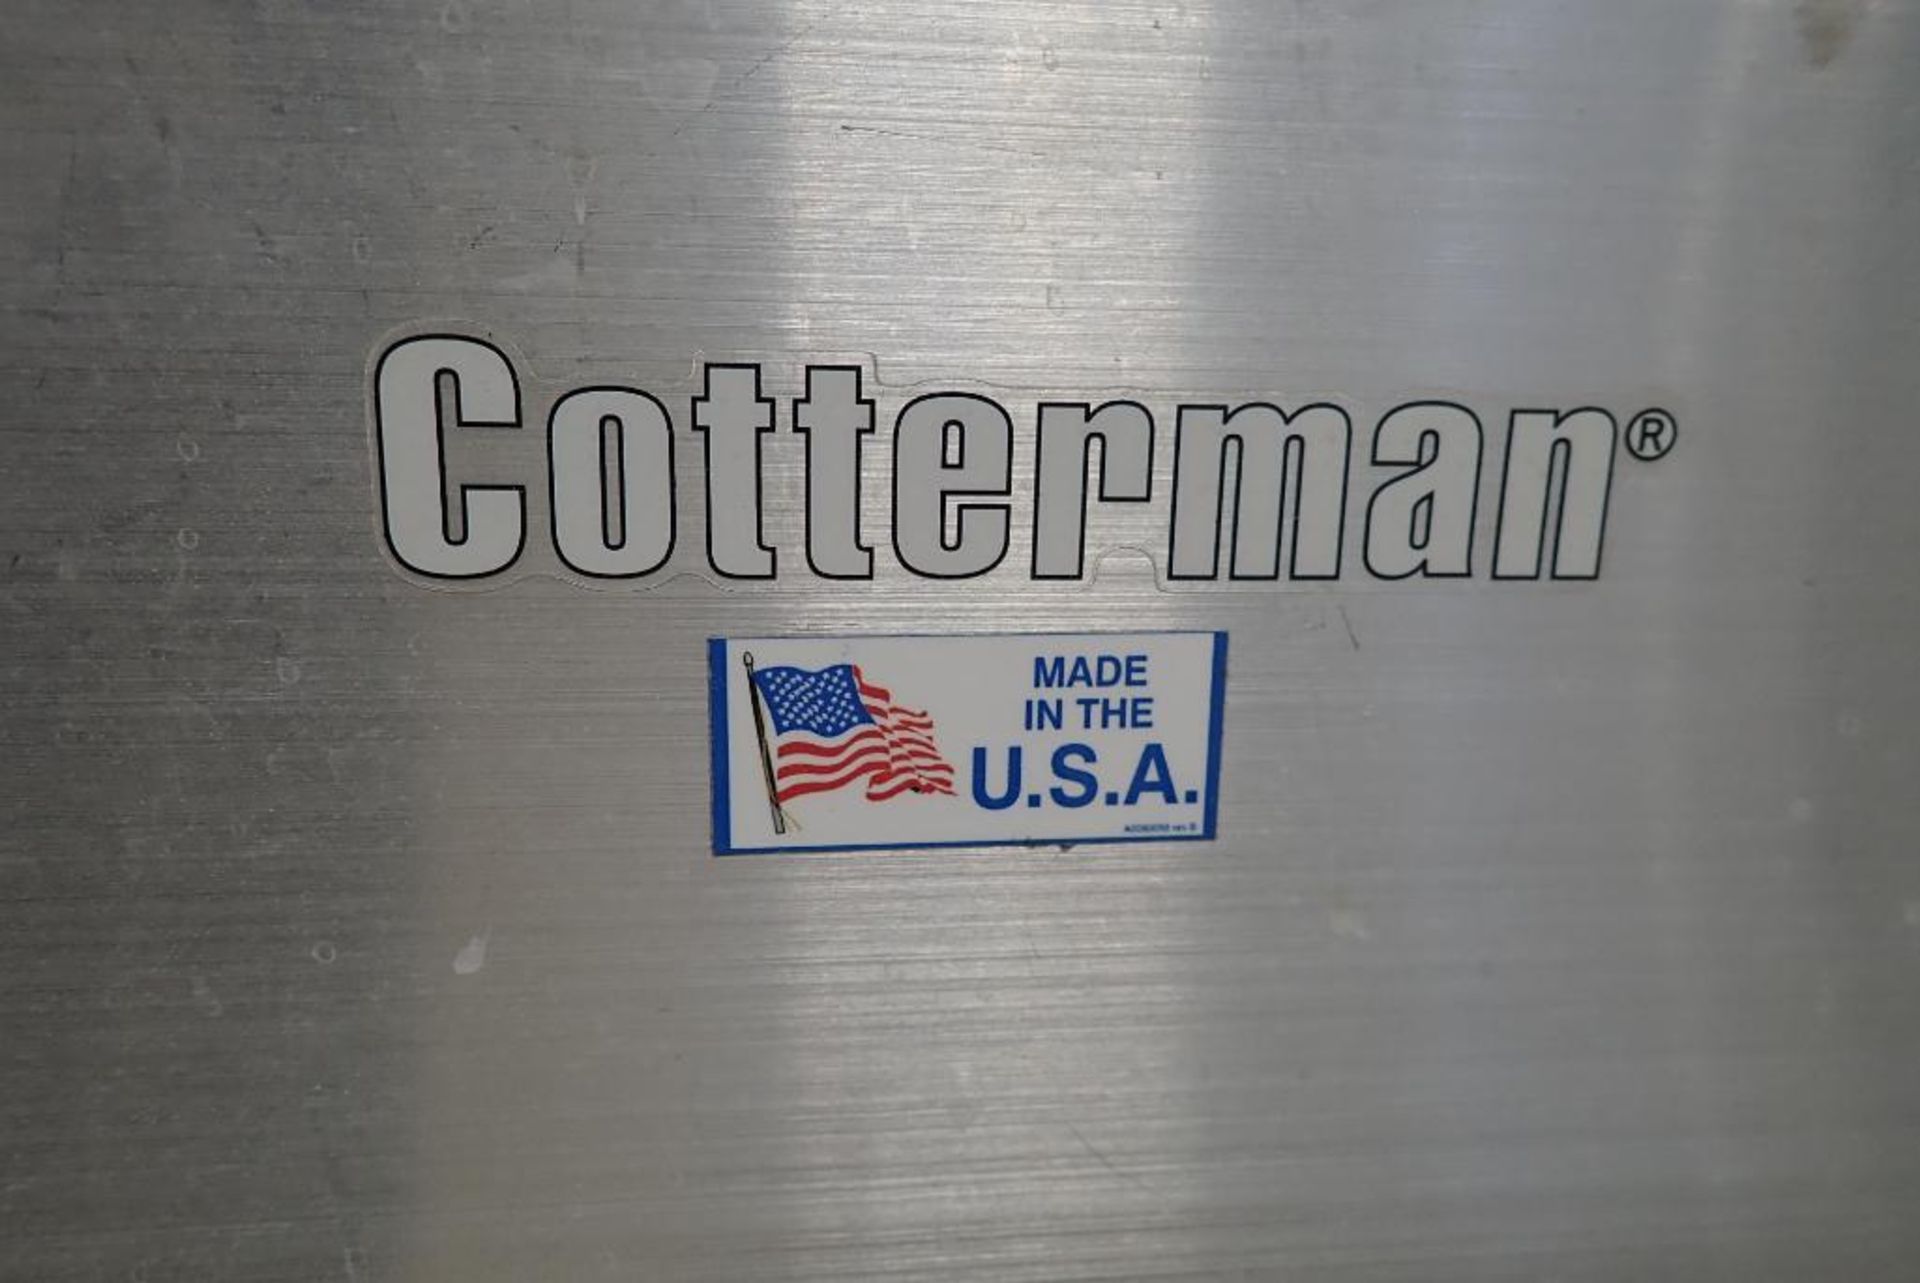 Cotterman aluminum conveyor crossover - Image 6 of 7